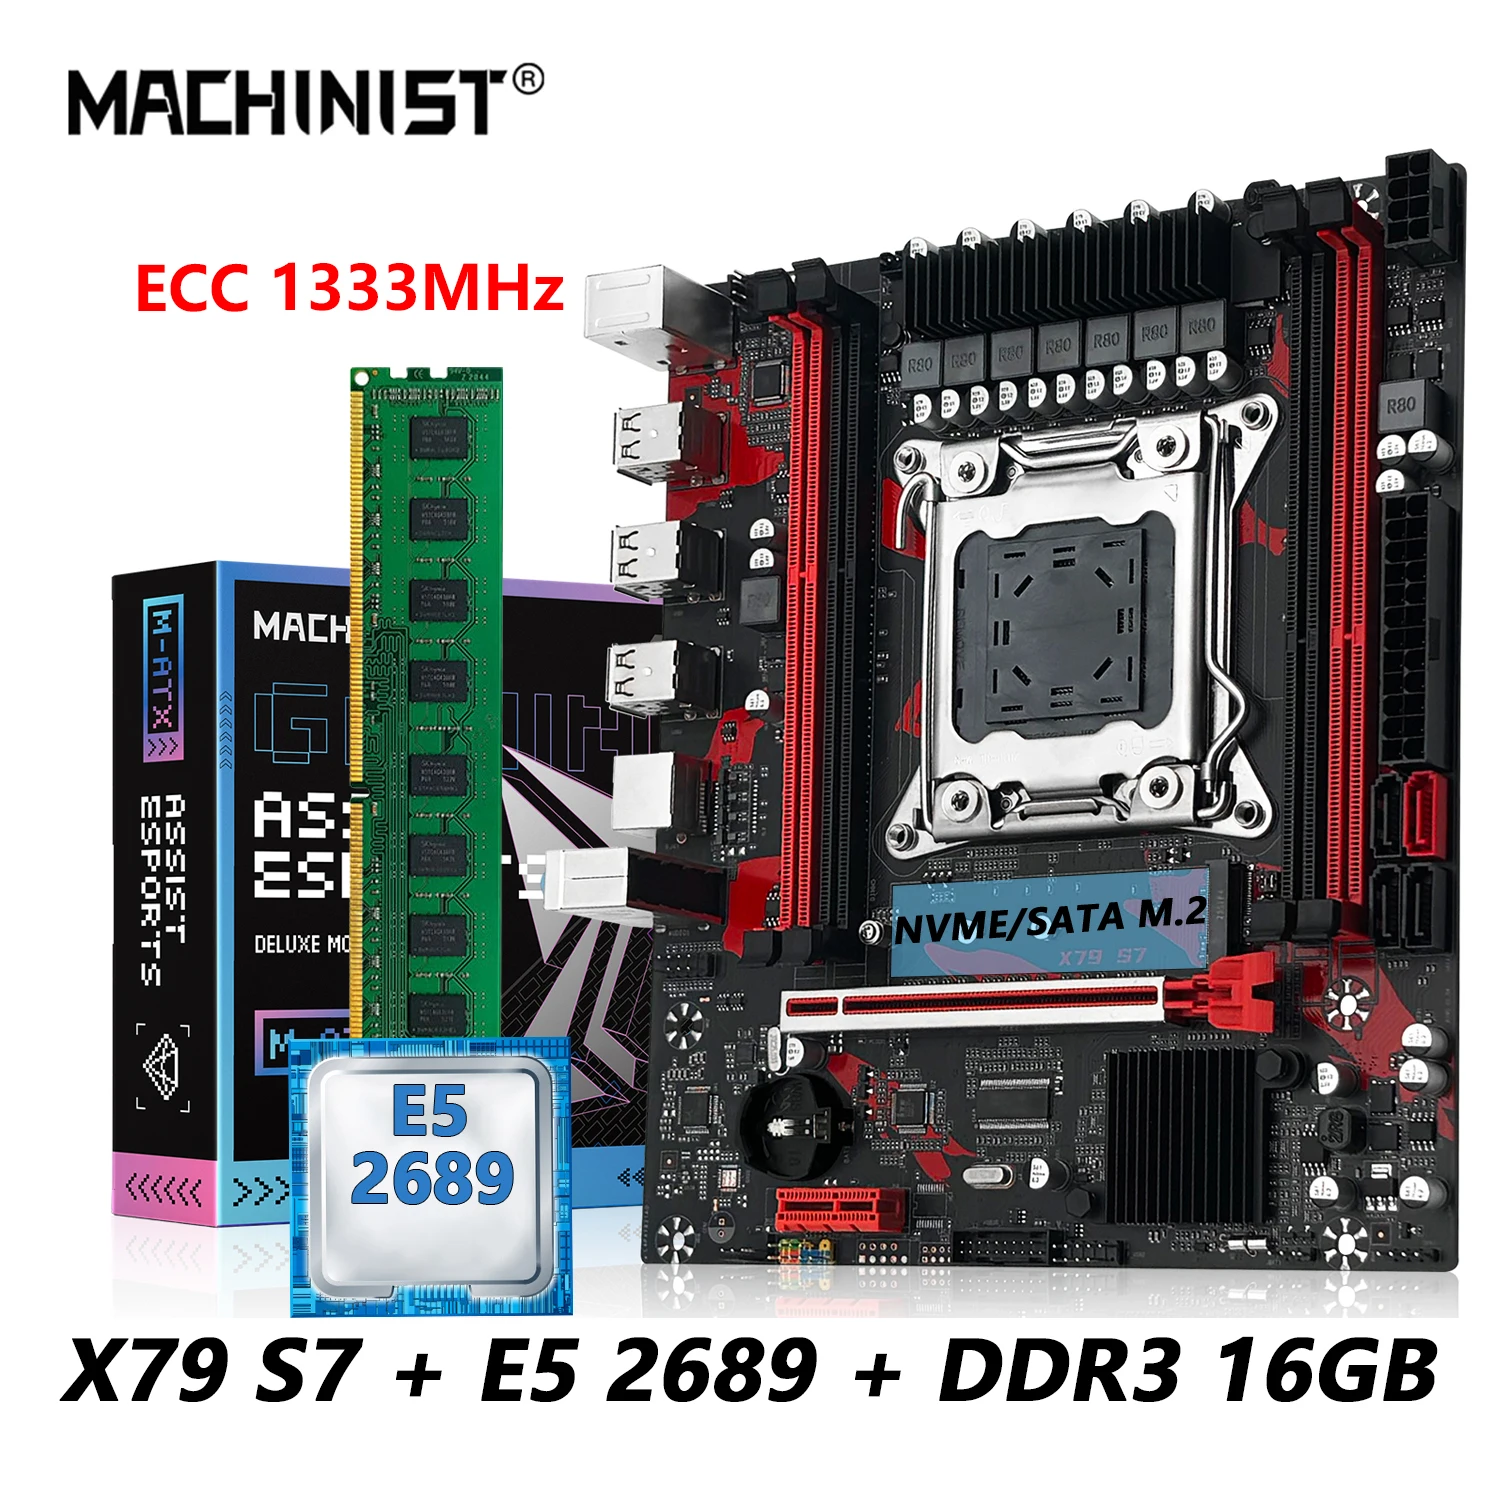 

MACHINIST X79 S7 Motherboard combo Intel Xeon E5 2689 LGA 2011 CPU Processor + DDR3 16GB ECC RAM Support SSD M.2 NVME Slot